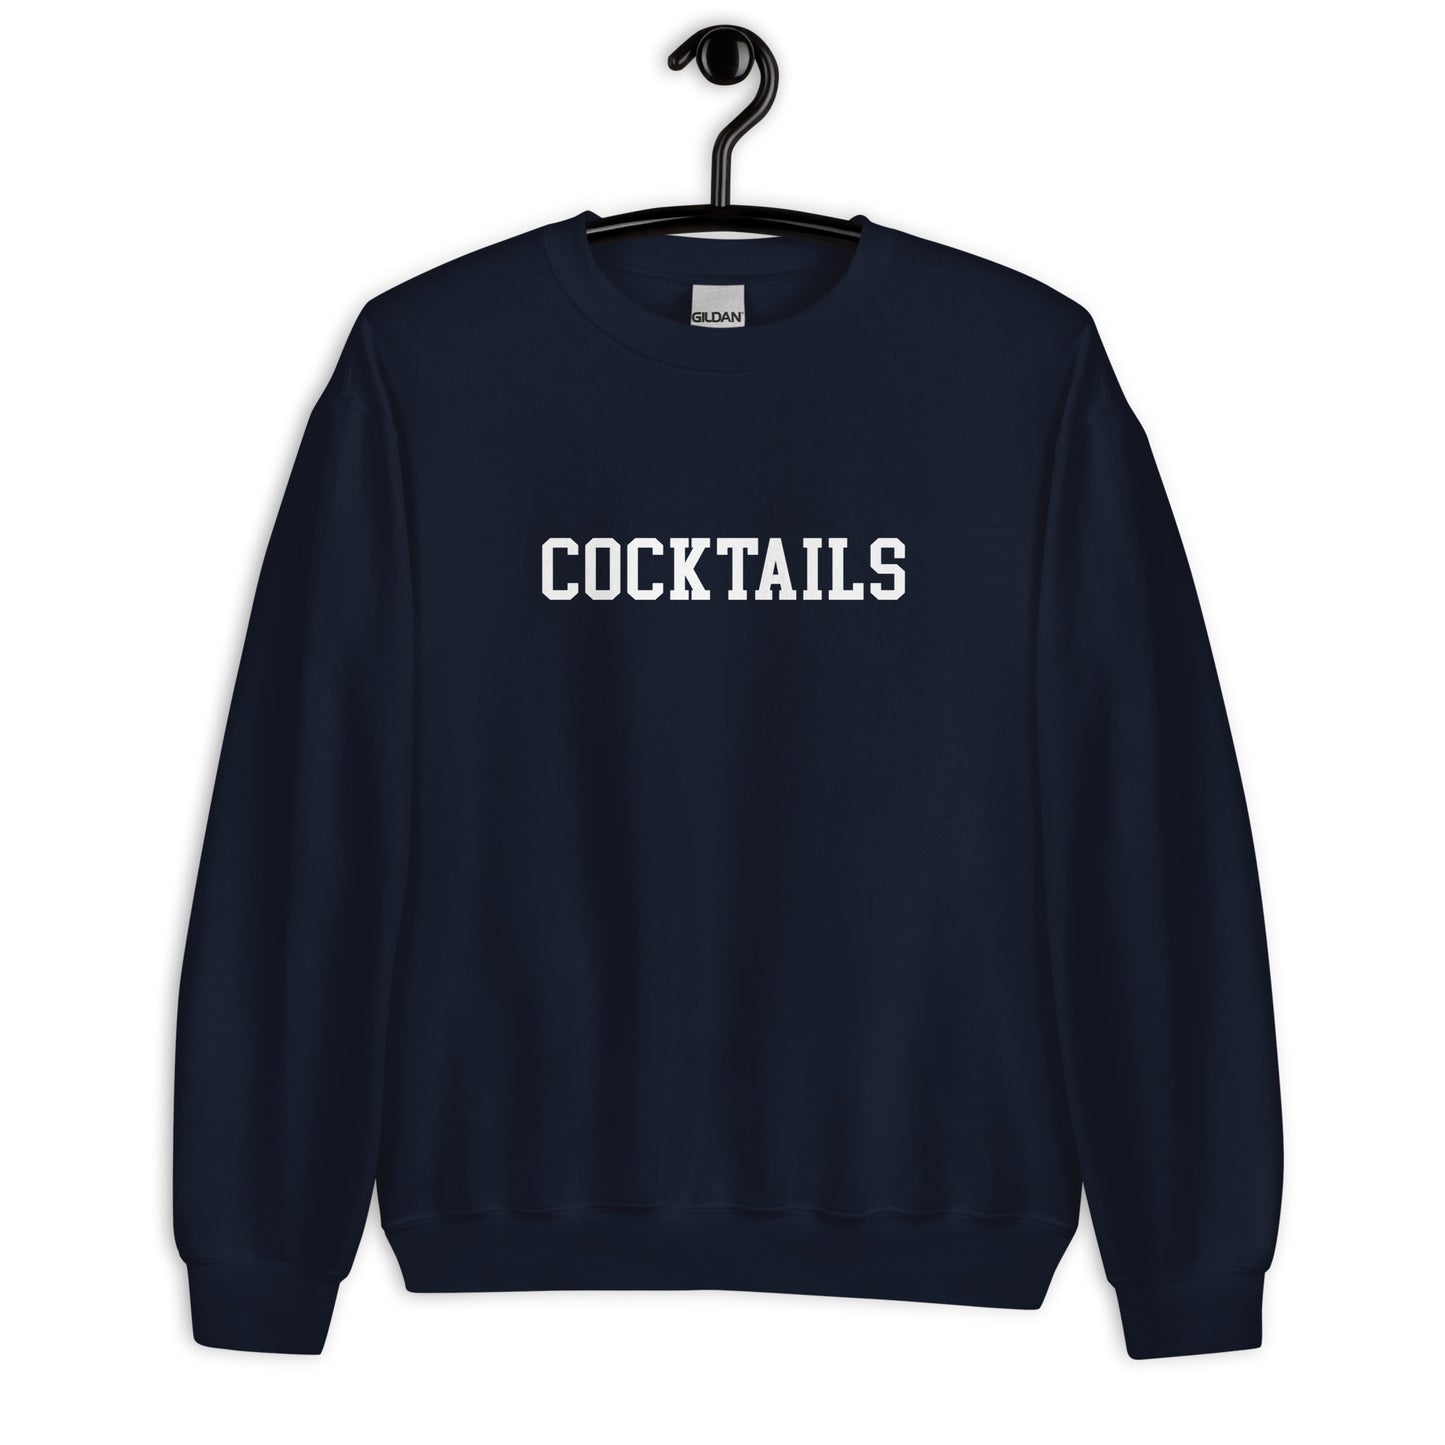 Cocktails Sweatshirt - Straight Font